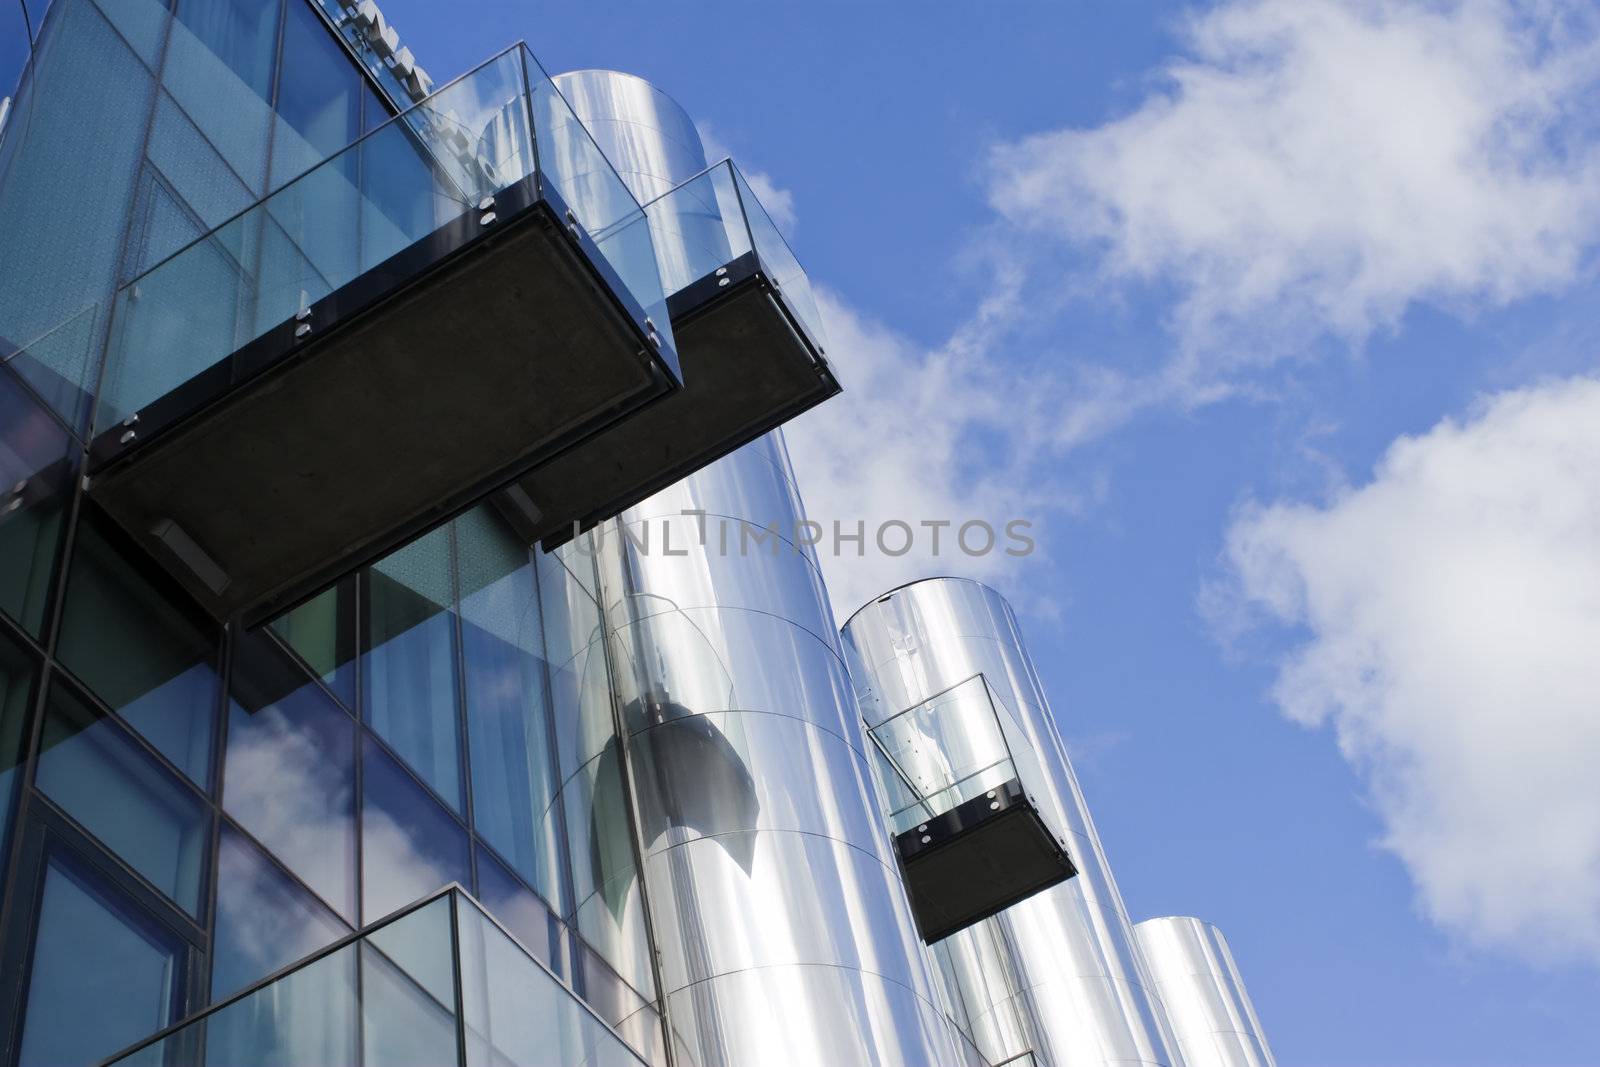 Futuristic building with balcony and deep blue sky.